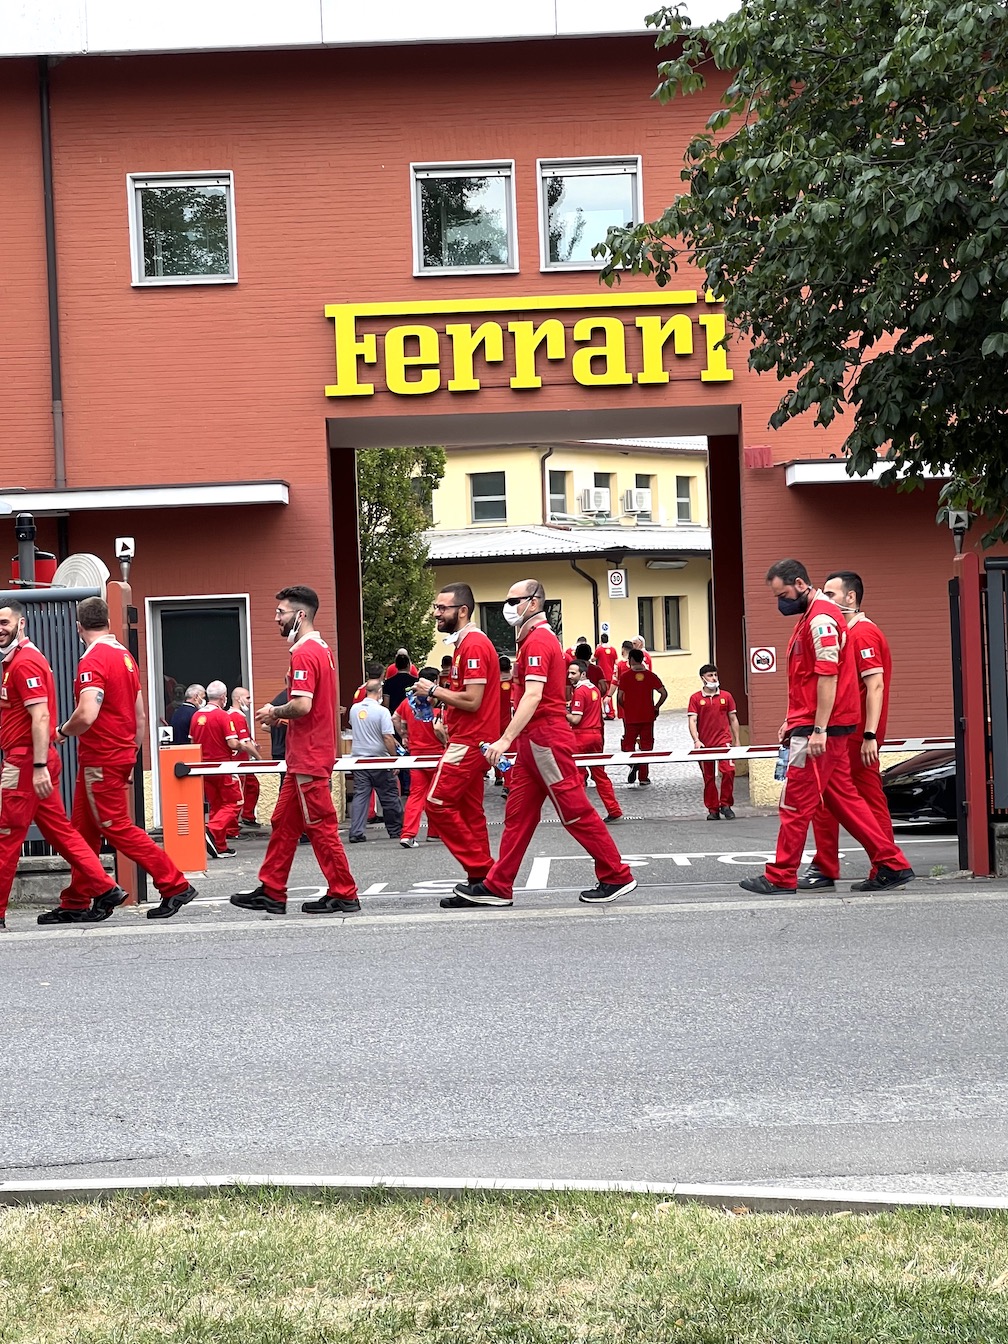 Ferrari, Maranello Italy